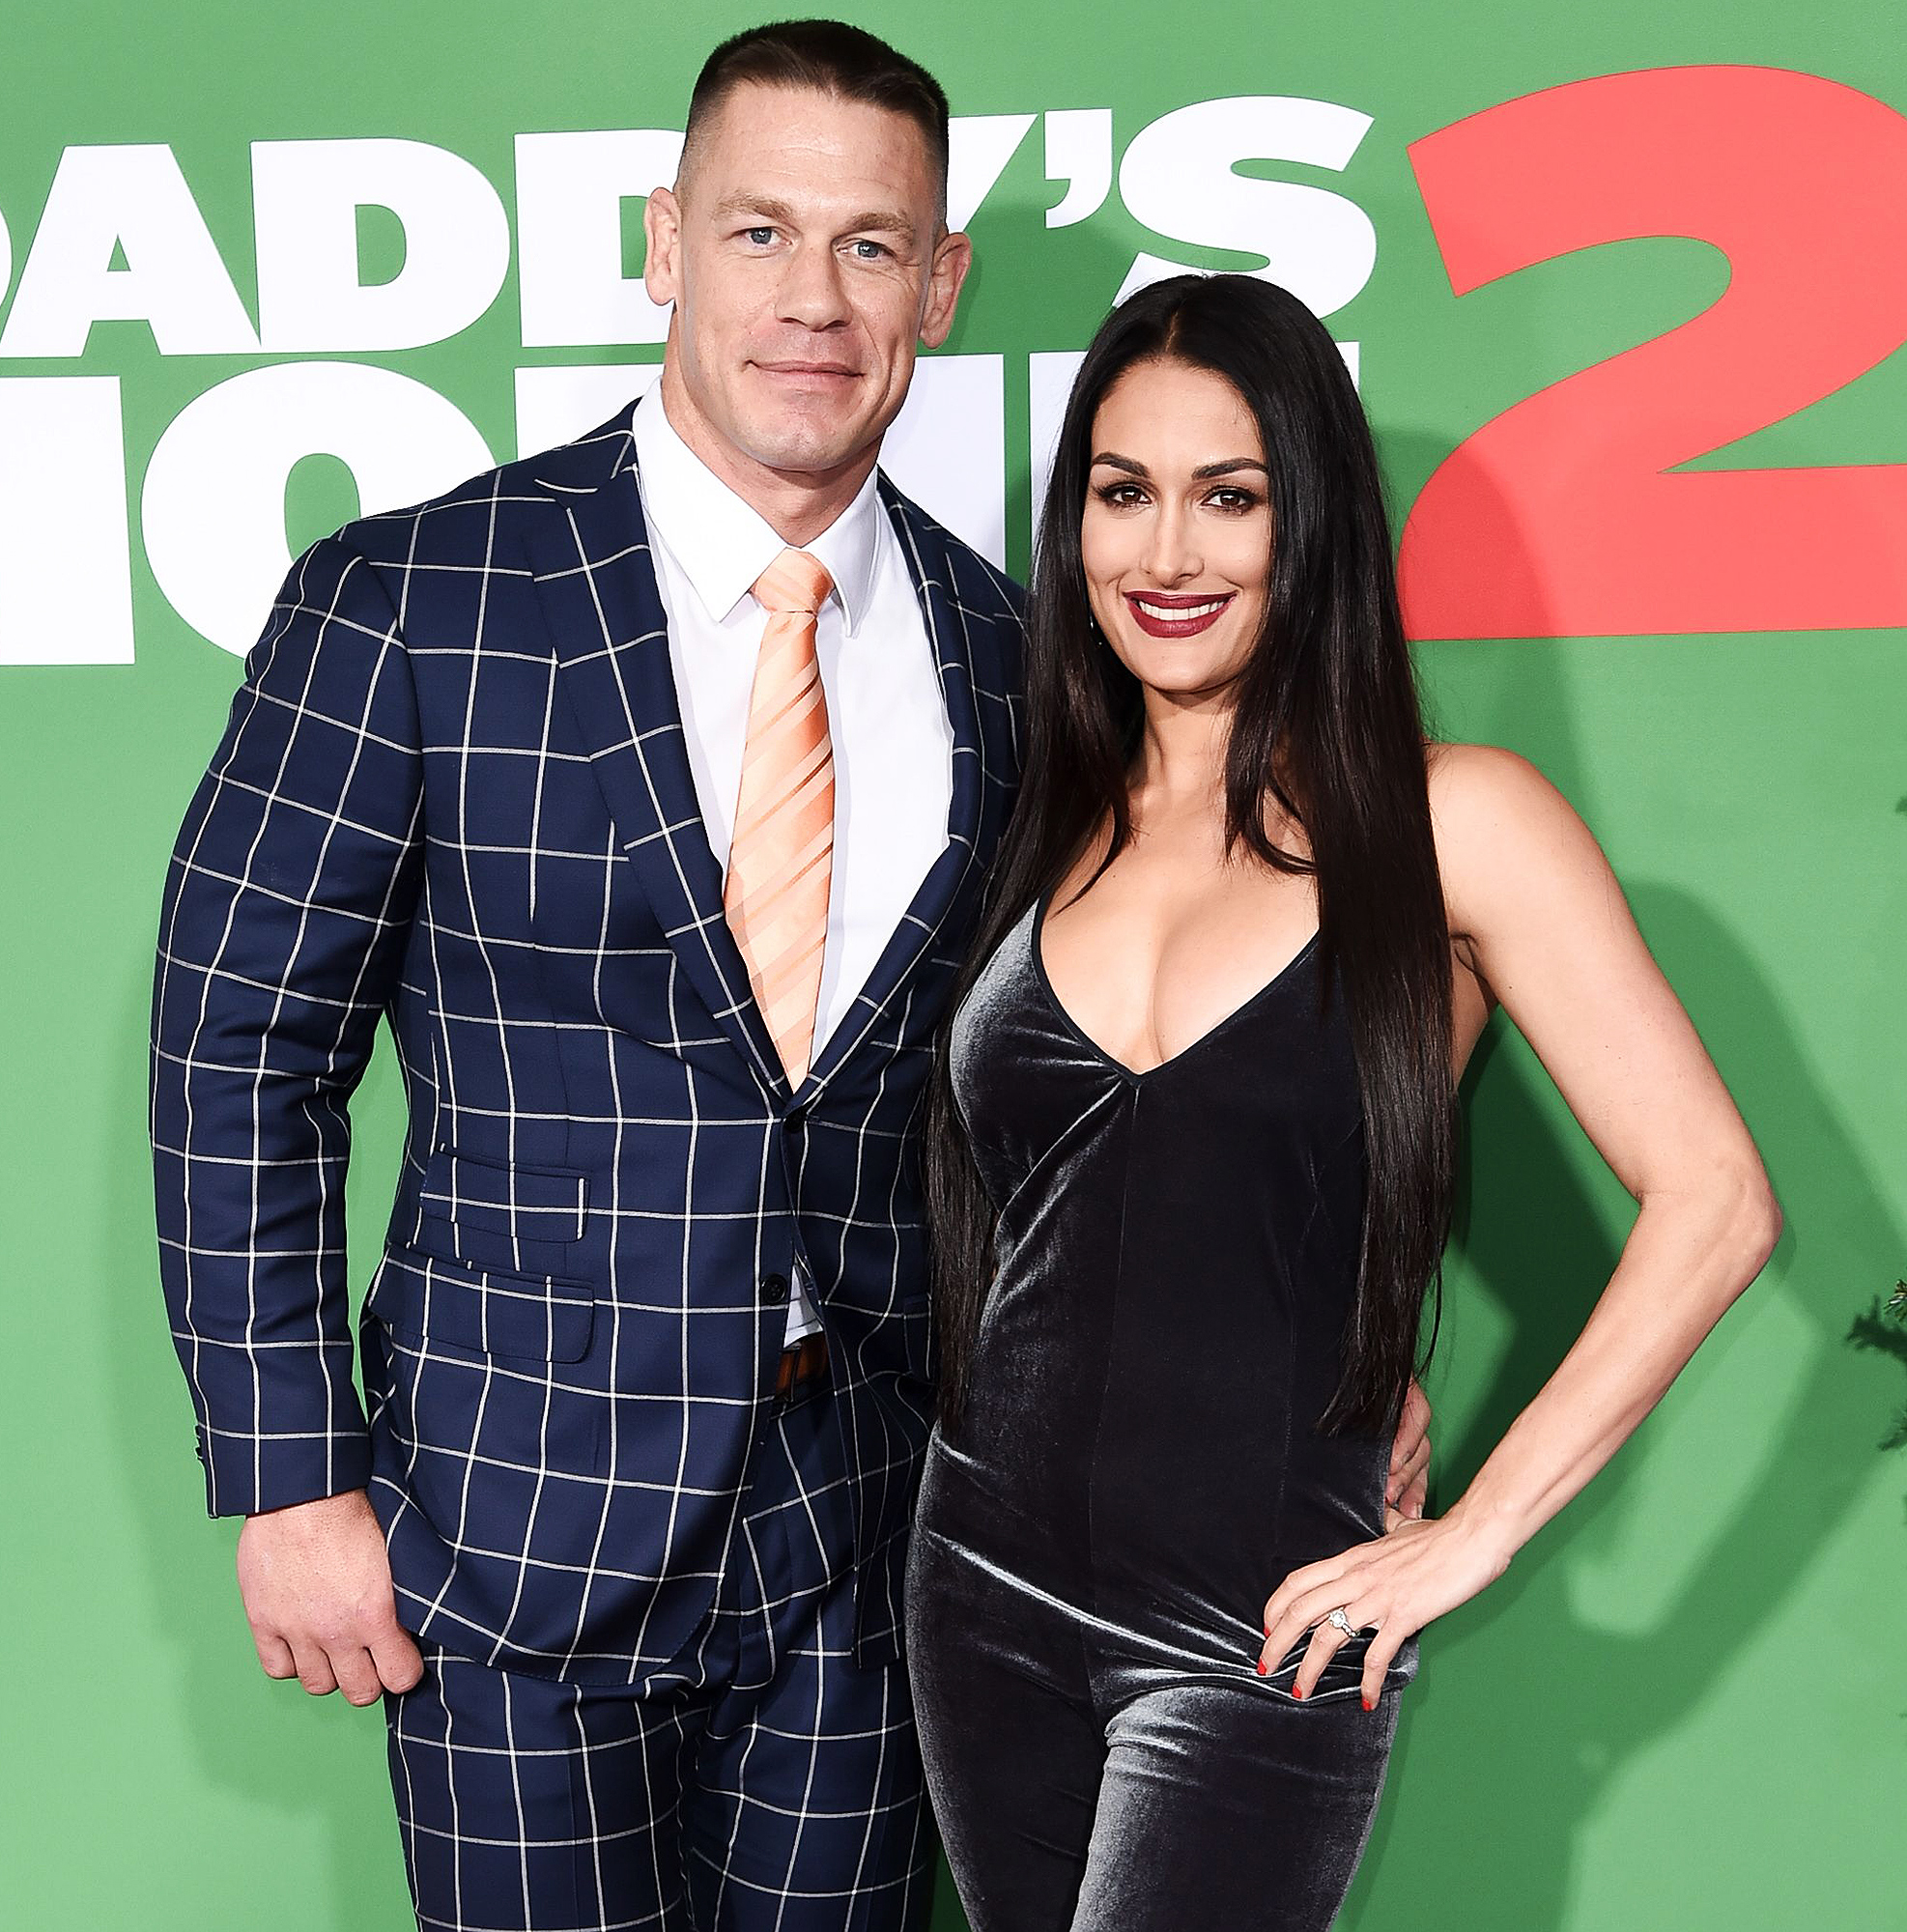 John Cena on Date in Canada After Nikki Bella Break Up 2019